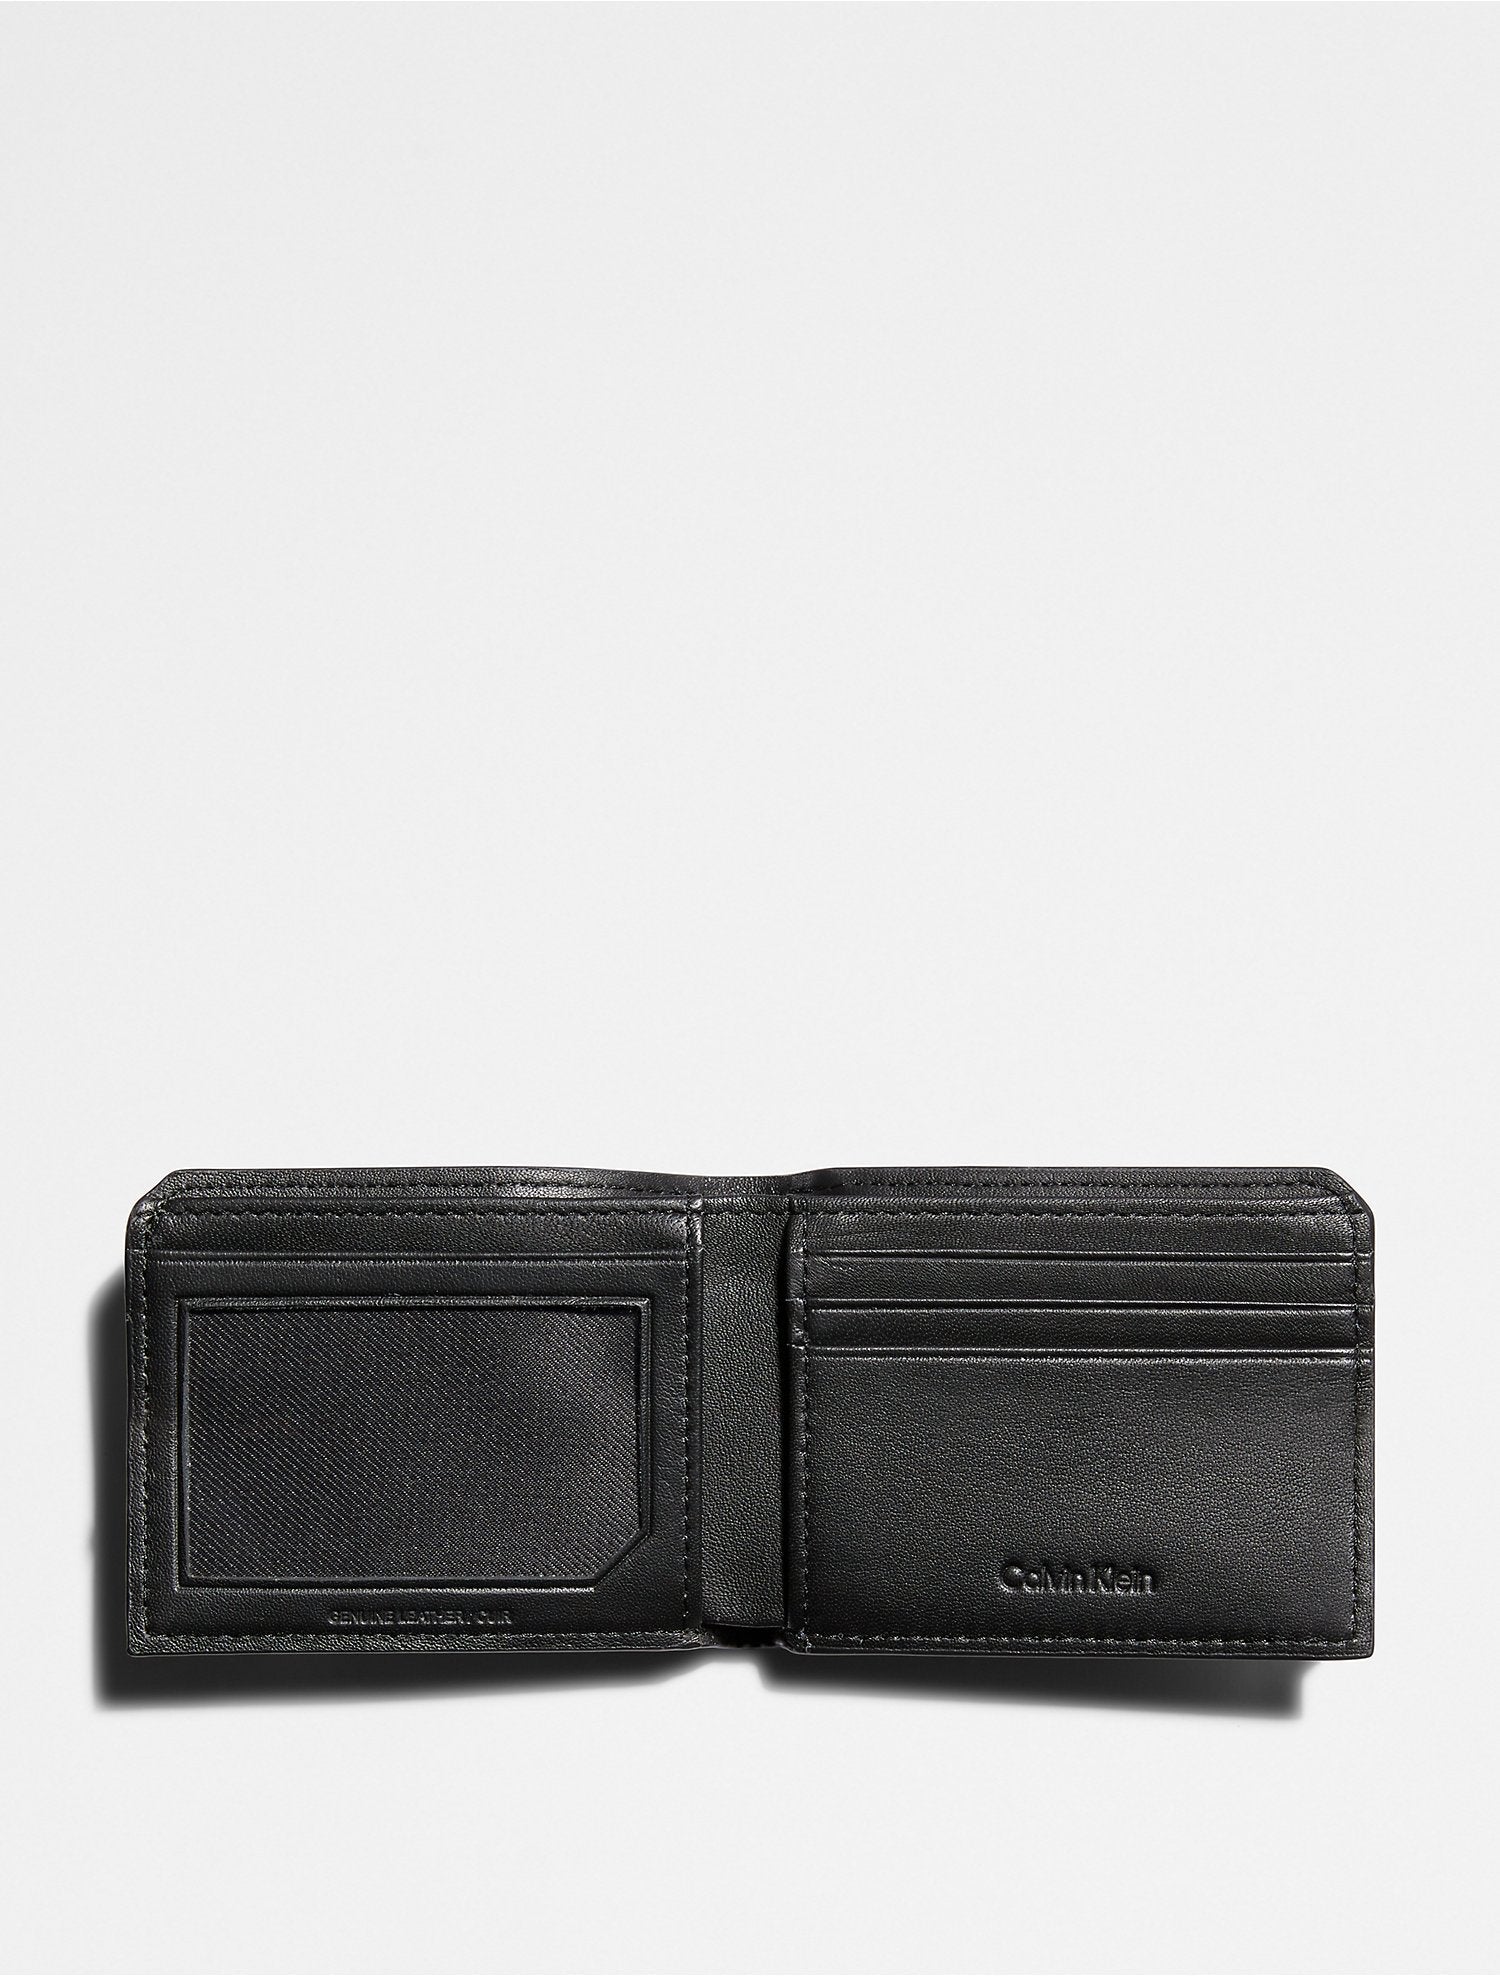 Calvin Klein Pebble Leather Slim Bifold Wallet - Men